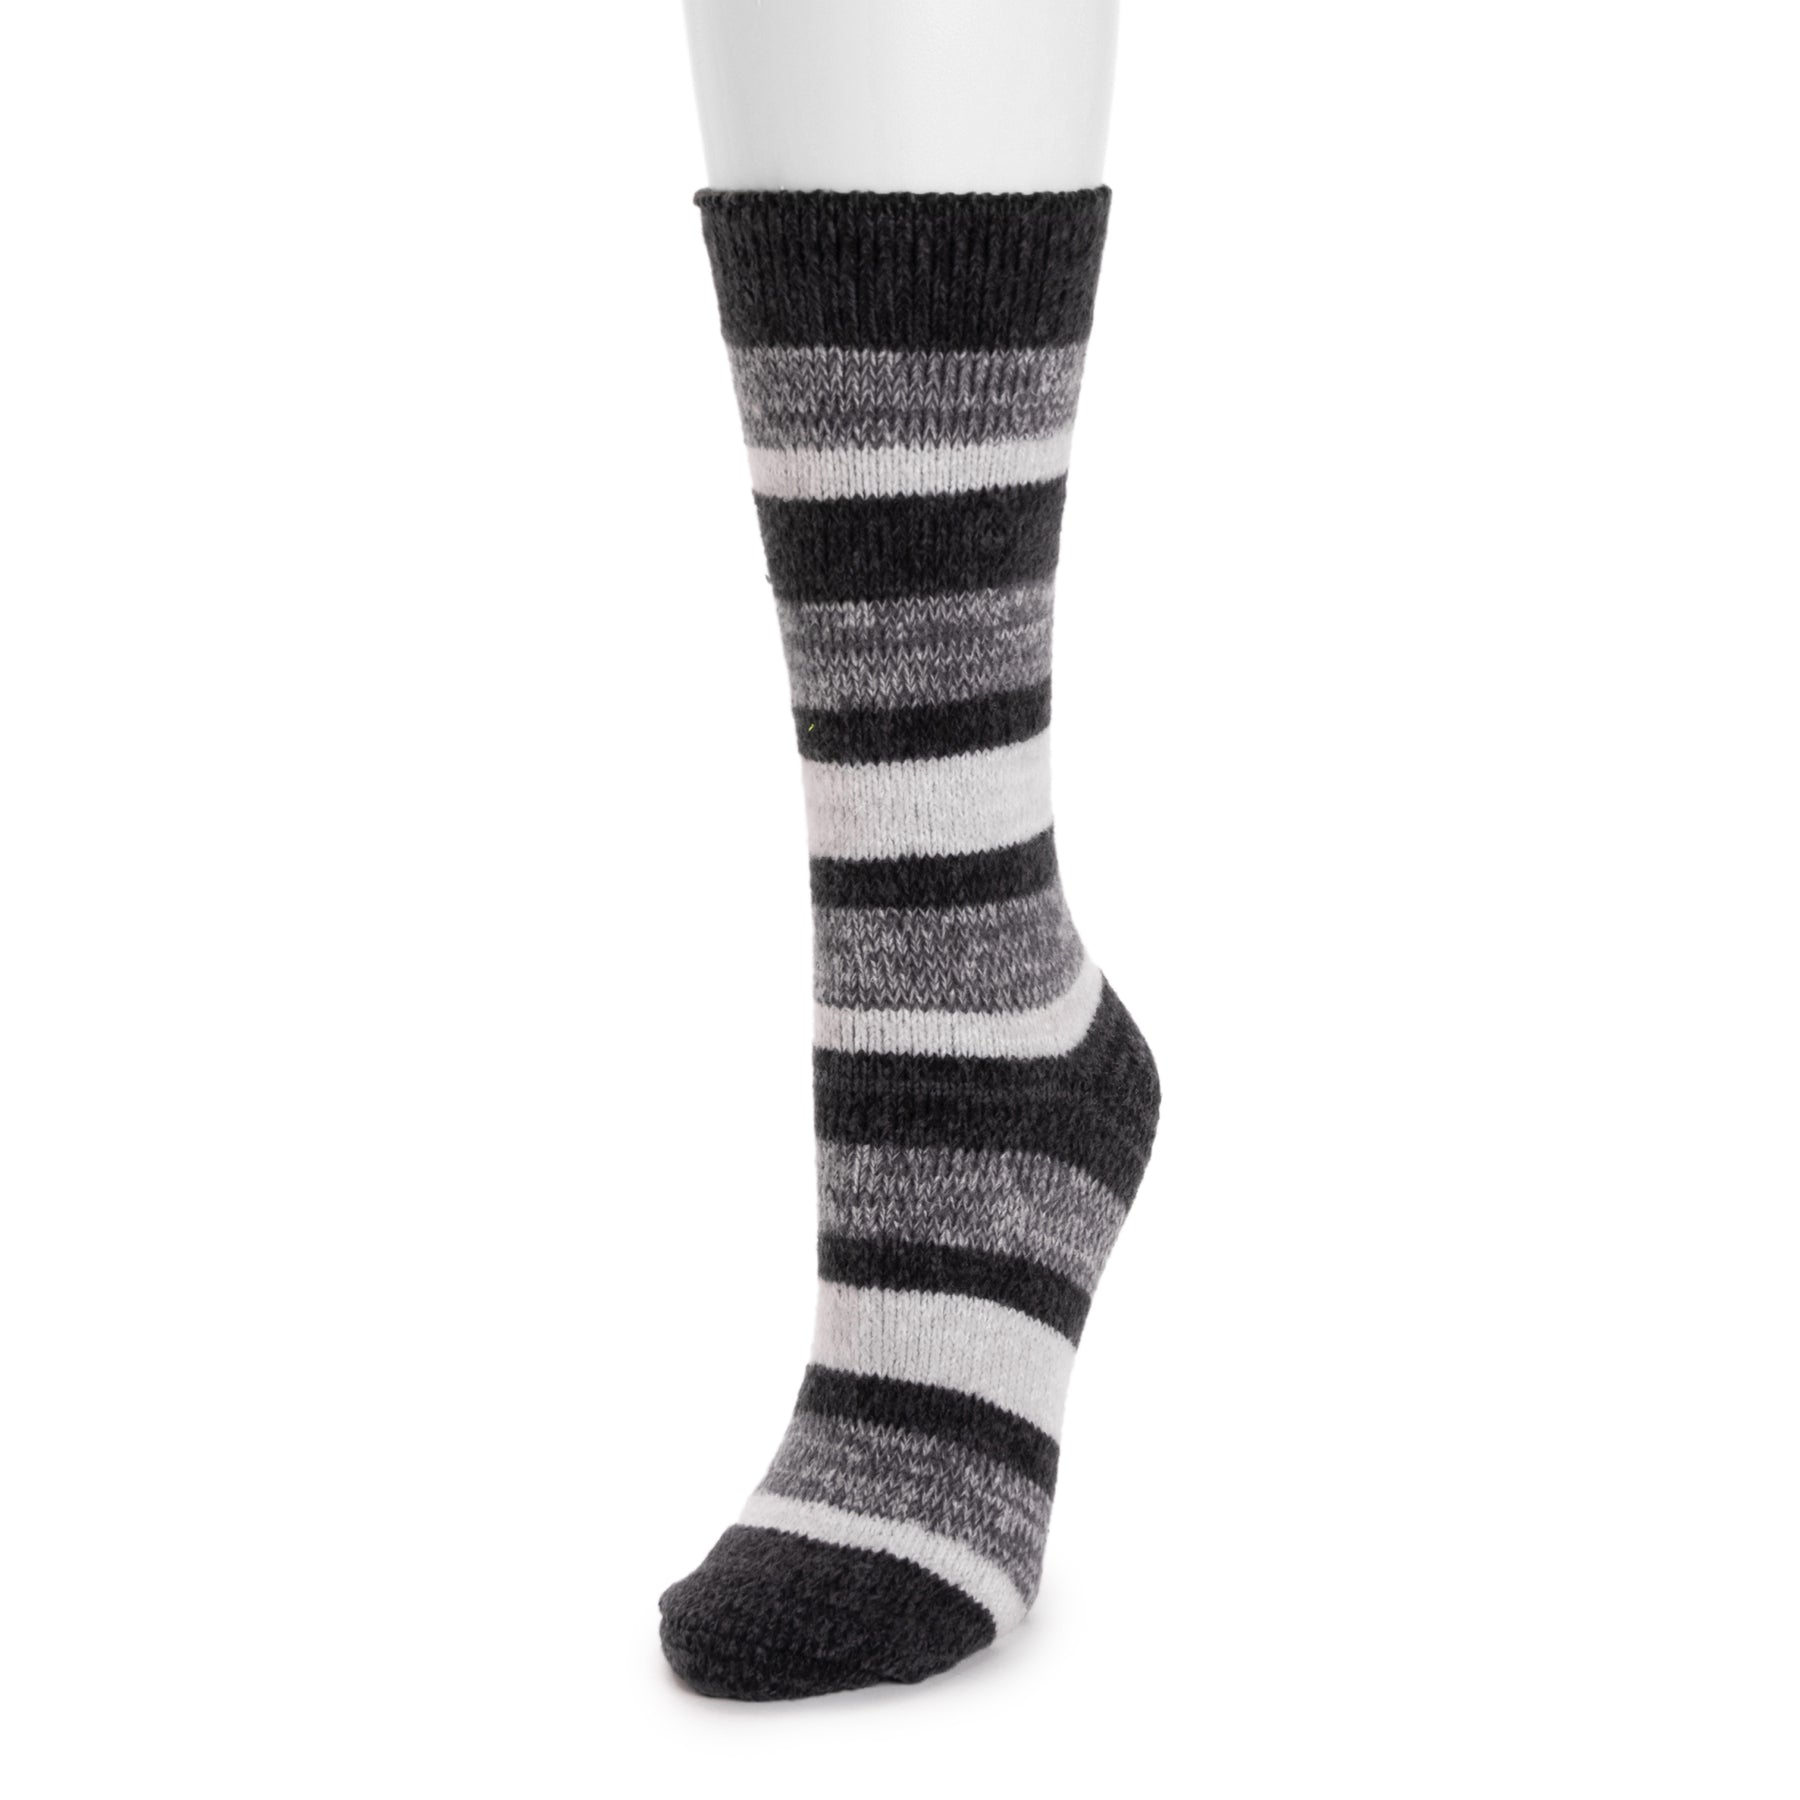 Womens Leggings & Tights  Muk Luks Jaquard Fleece Lined Leggings  Black,Grey » Erwan Raguenes